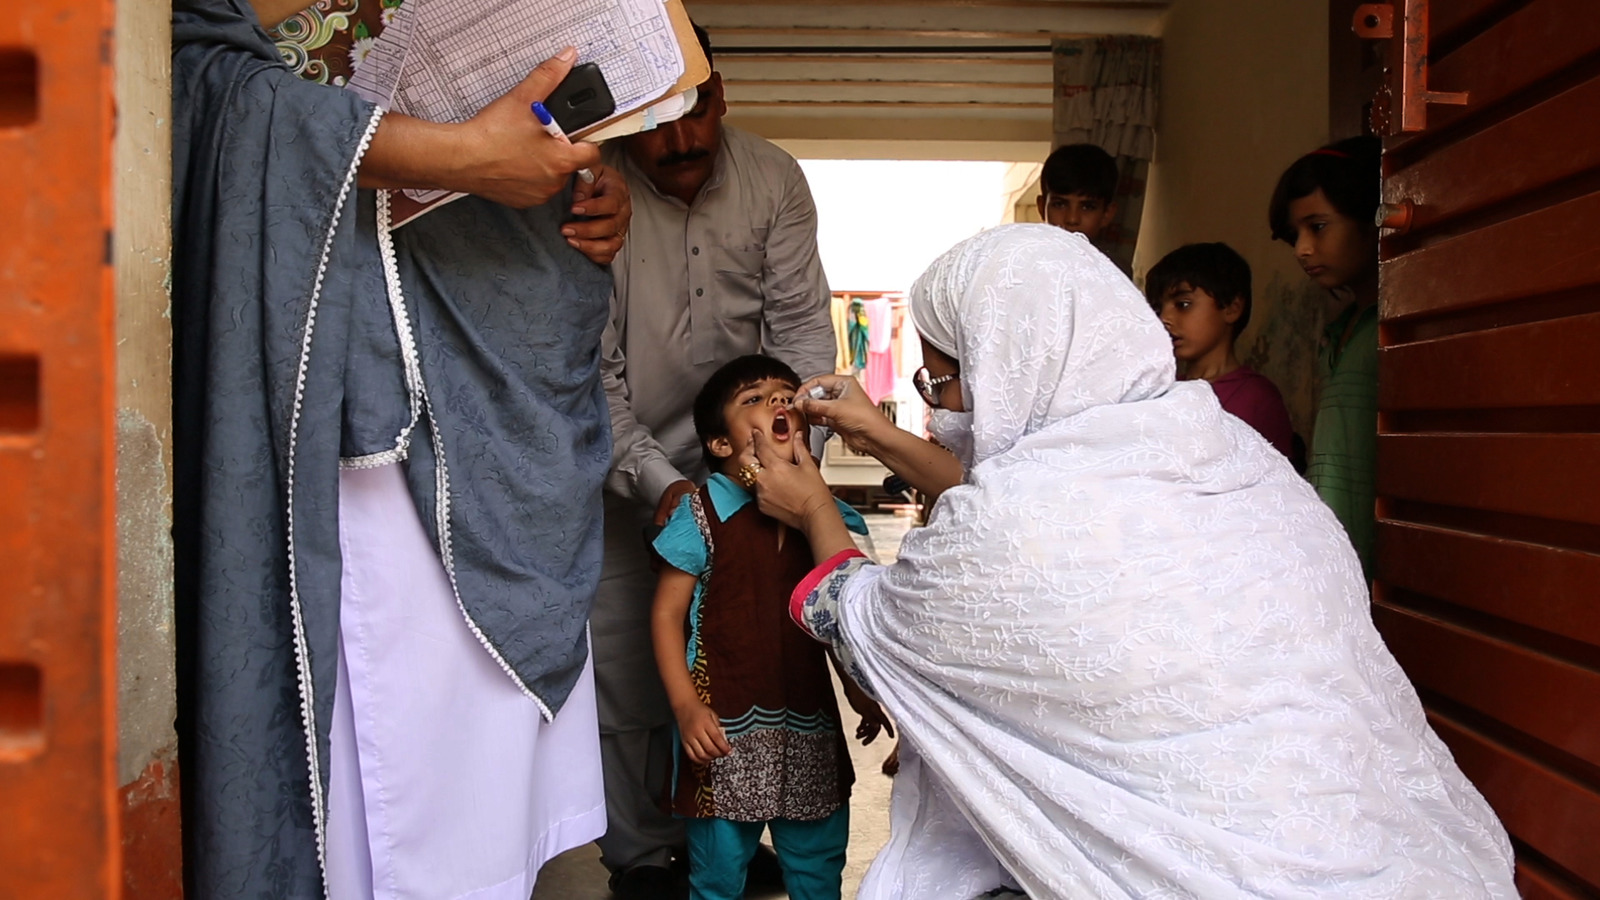 Caption: Vaccination against polio in Pakistan. Credit: Sanofi Pasteur